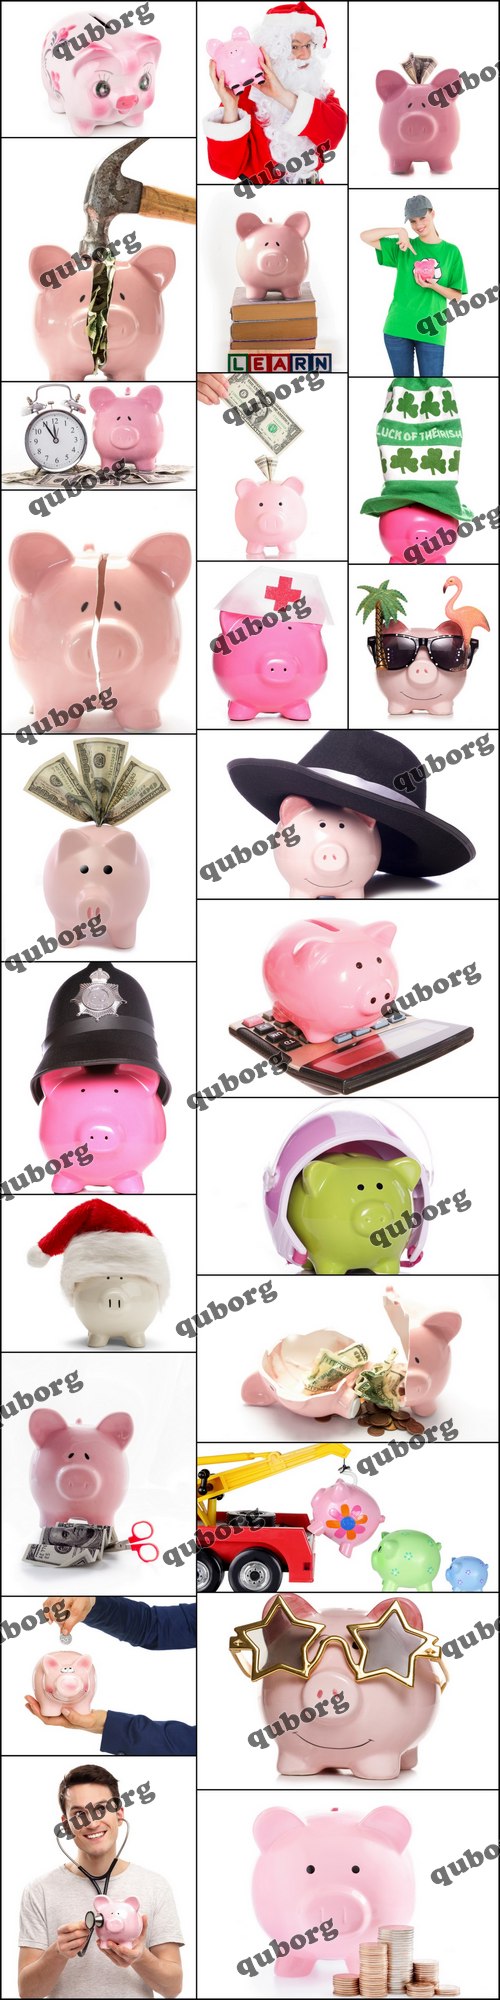 Stock Photos - Piggy Bank on White Background